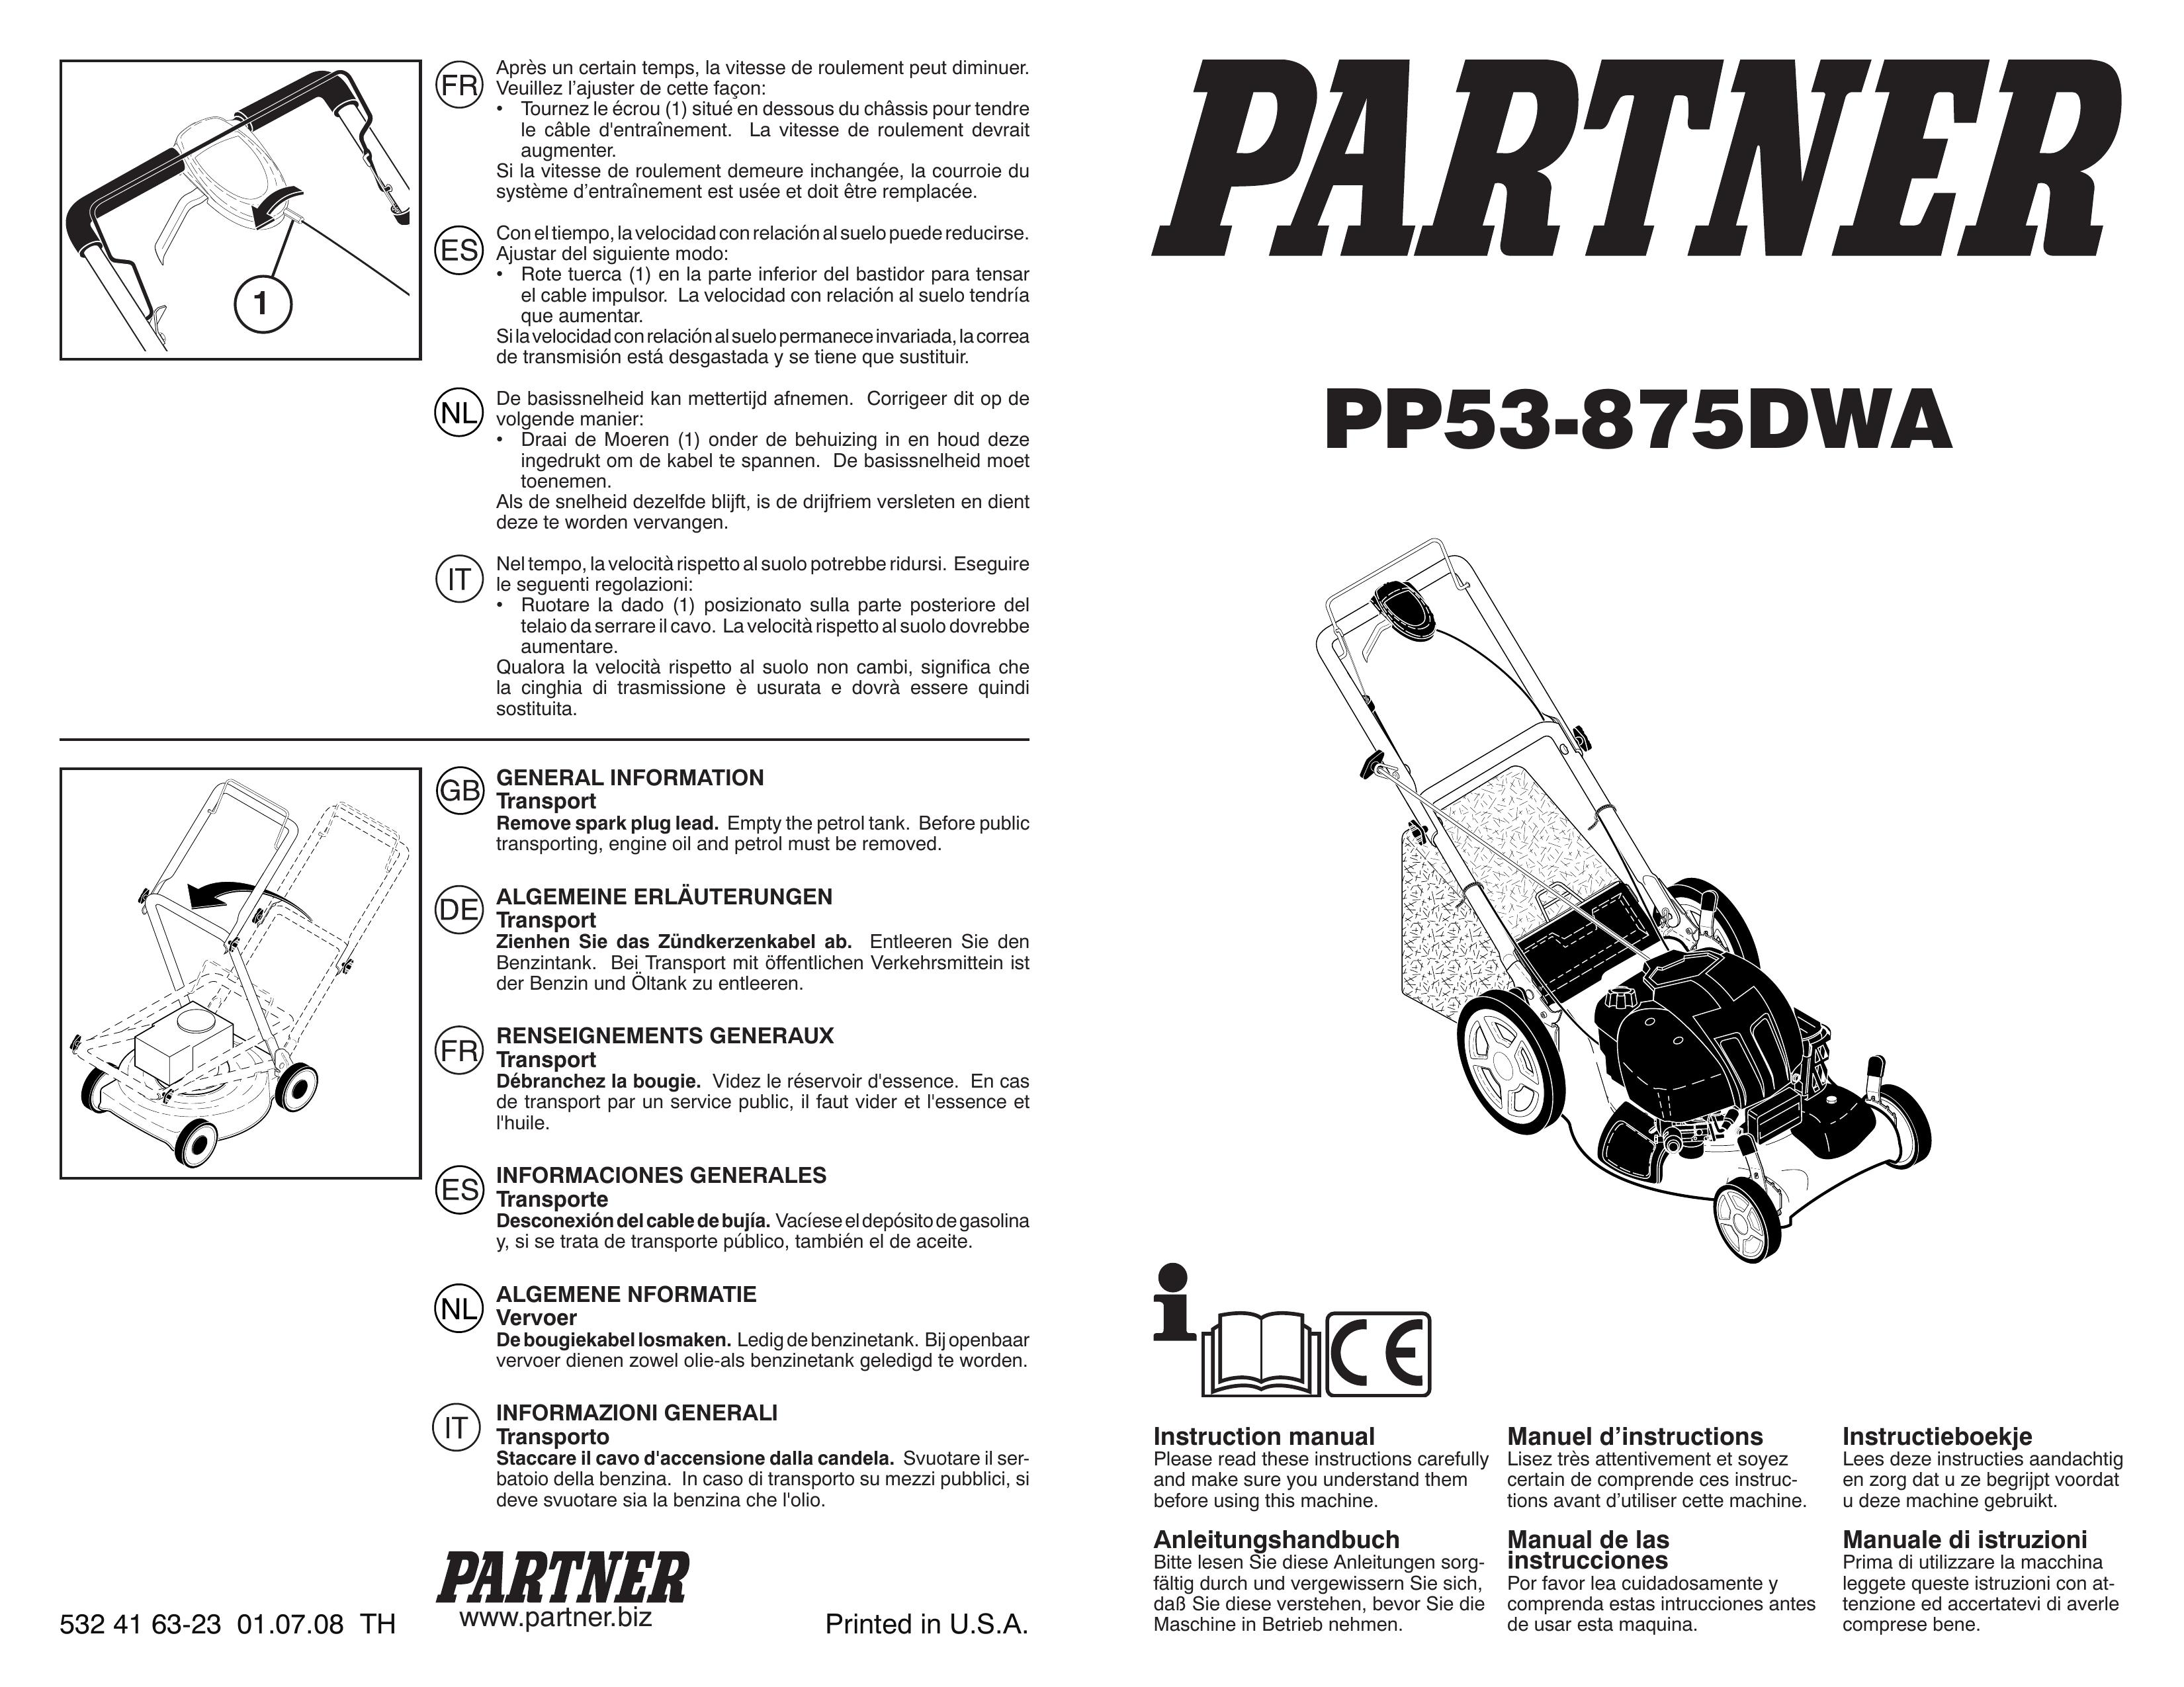 Partner Tech PP53-875DWA Lawn Mower User Manual